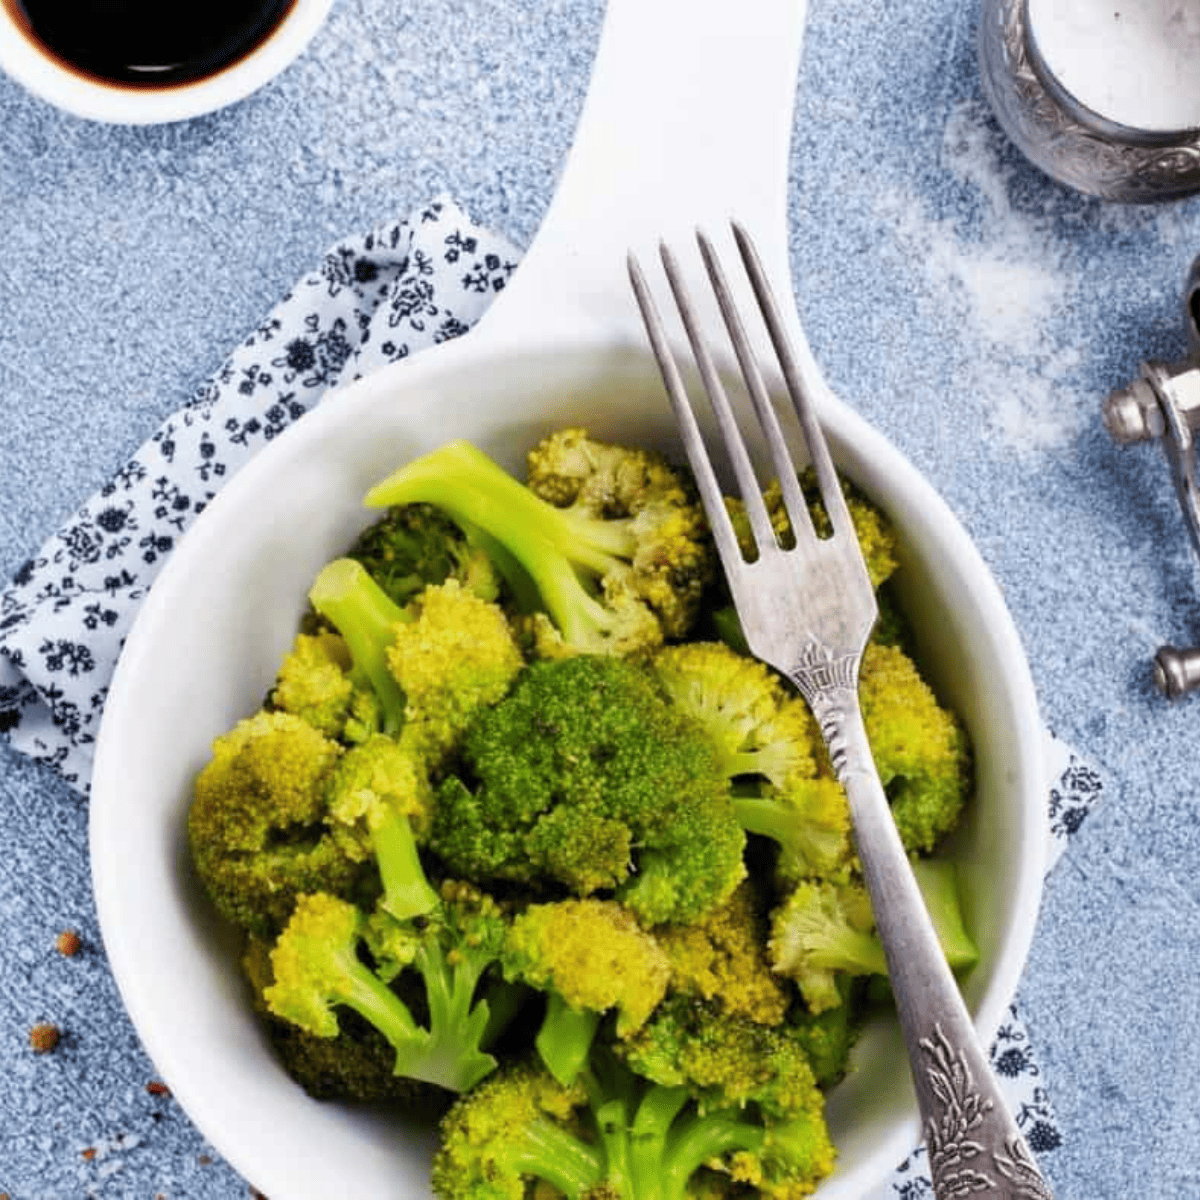 https://forktospoon.com/wp-content/uploads/2021/10/Instant-Pot-Vortex-Plus-Broccoli-Parmesan.png